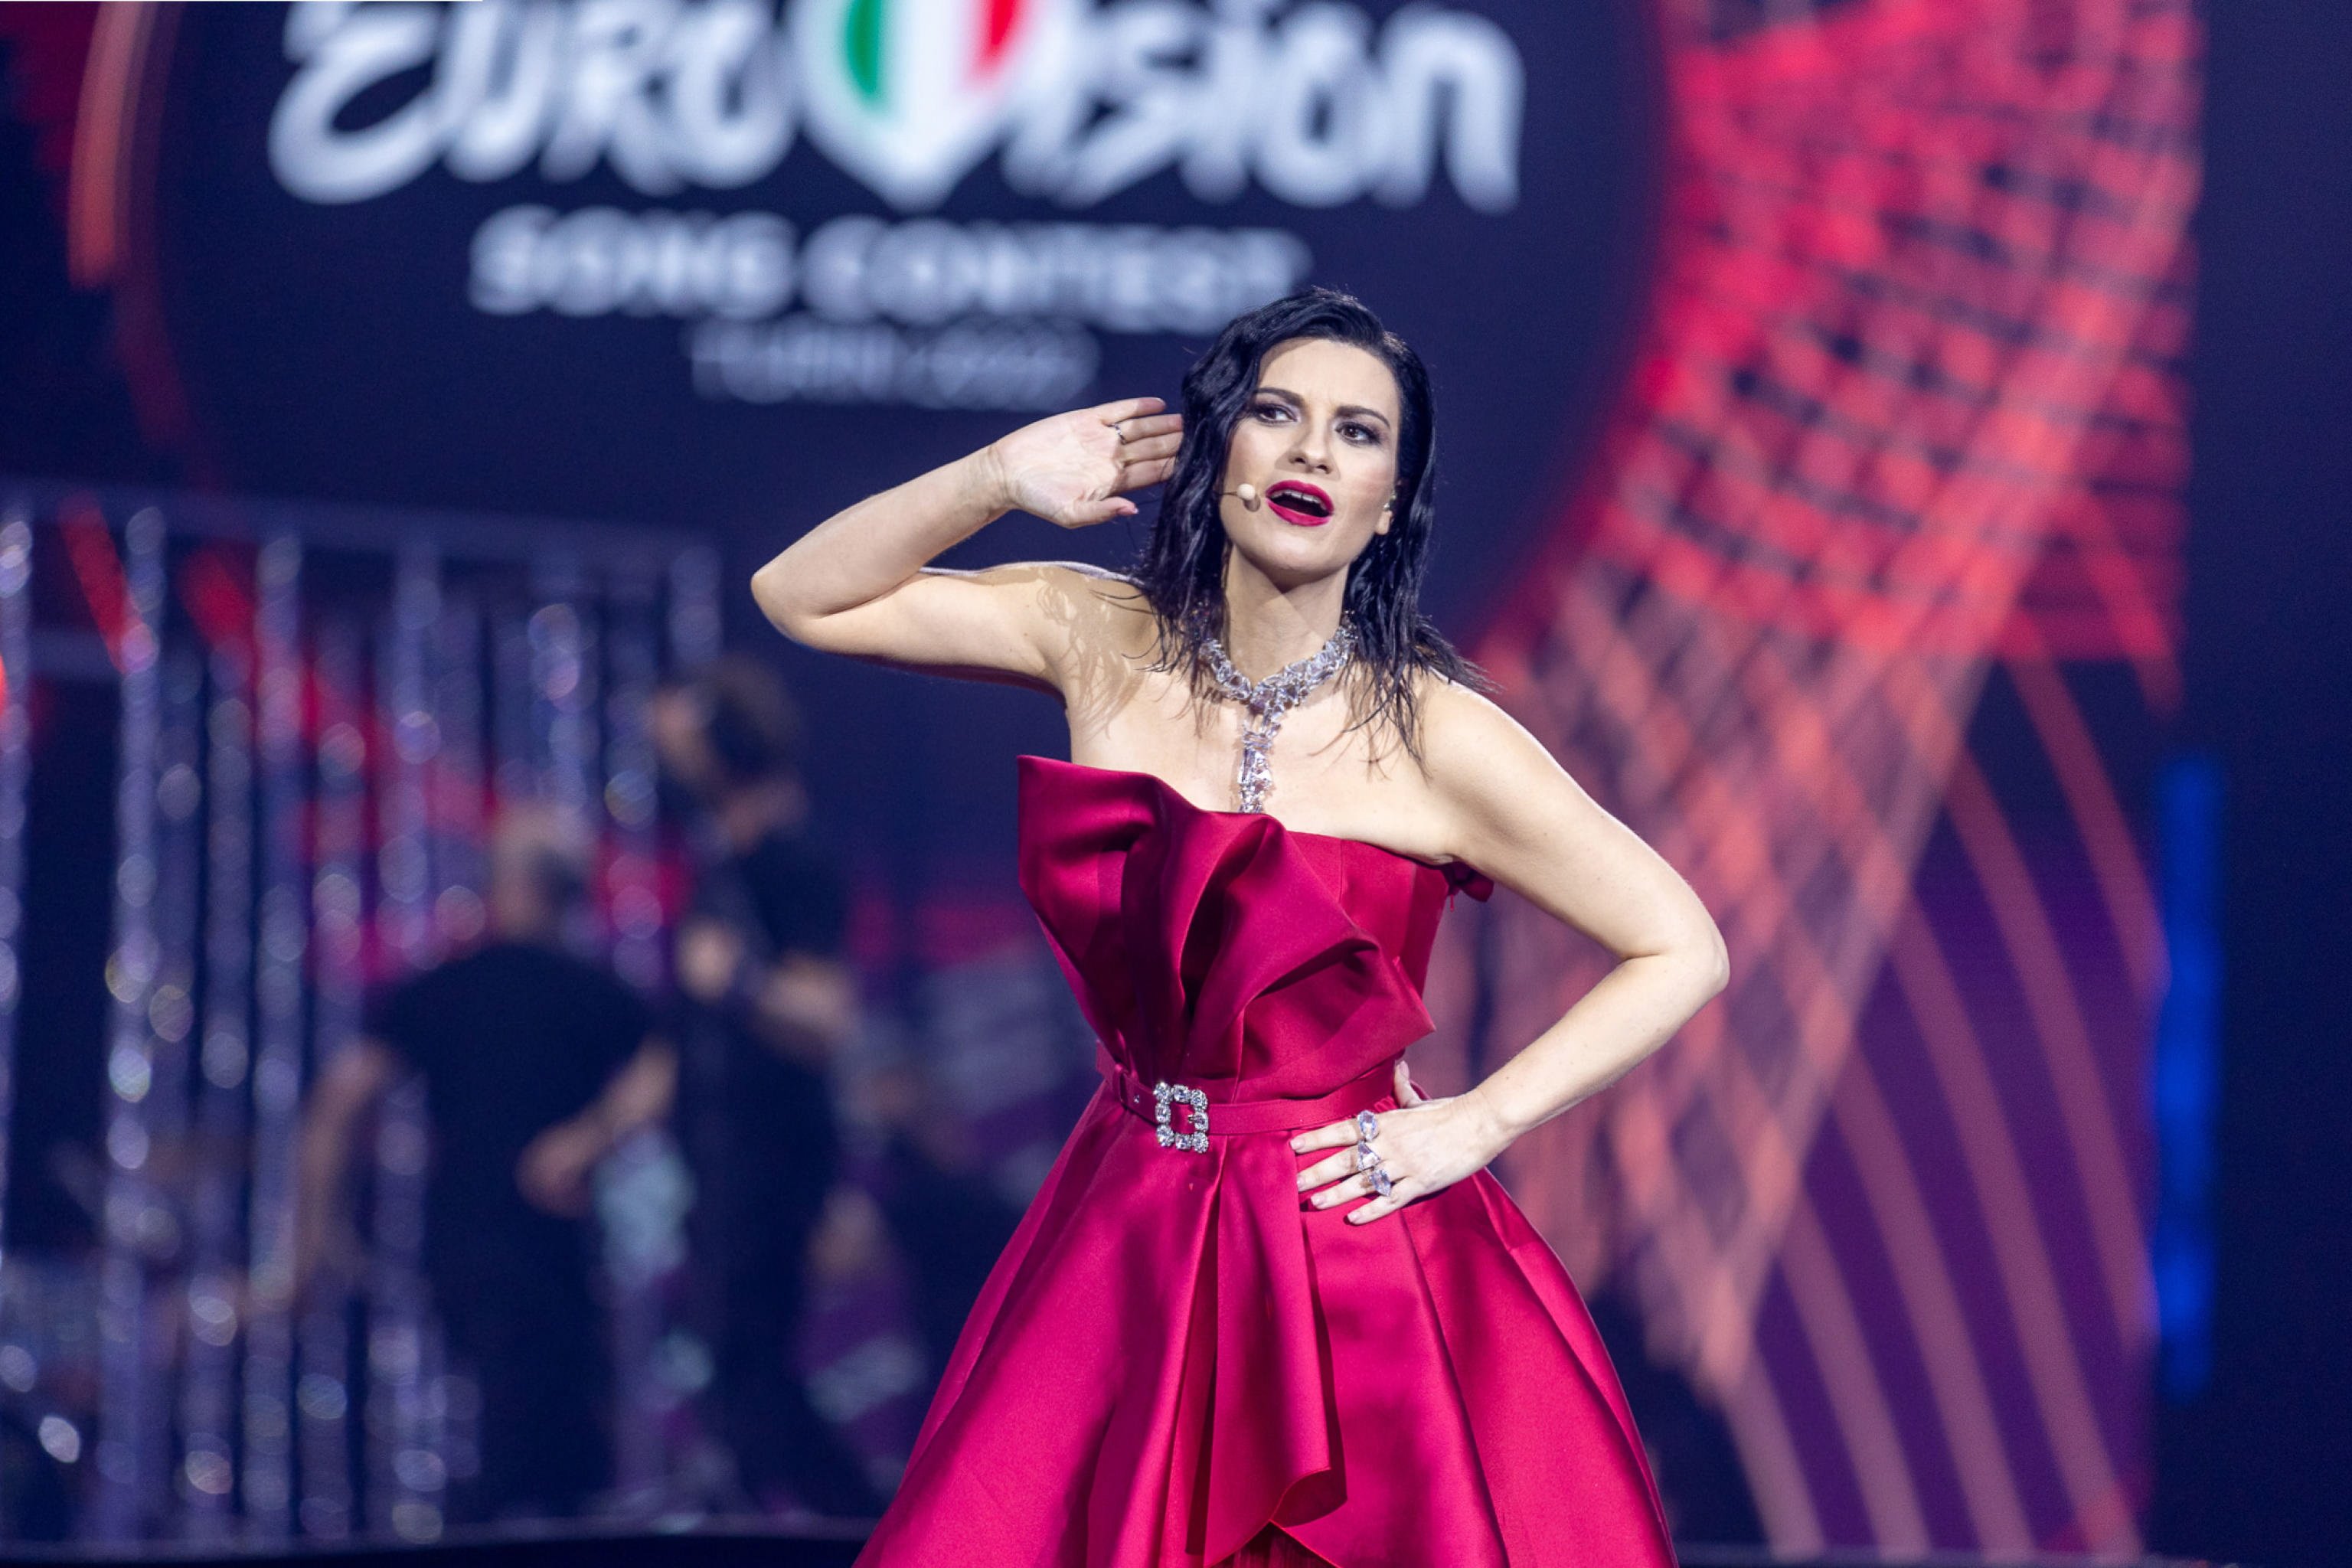 Últimas horas para Turín: Actualización de los favoritos de Eurovisión 2022